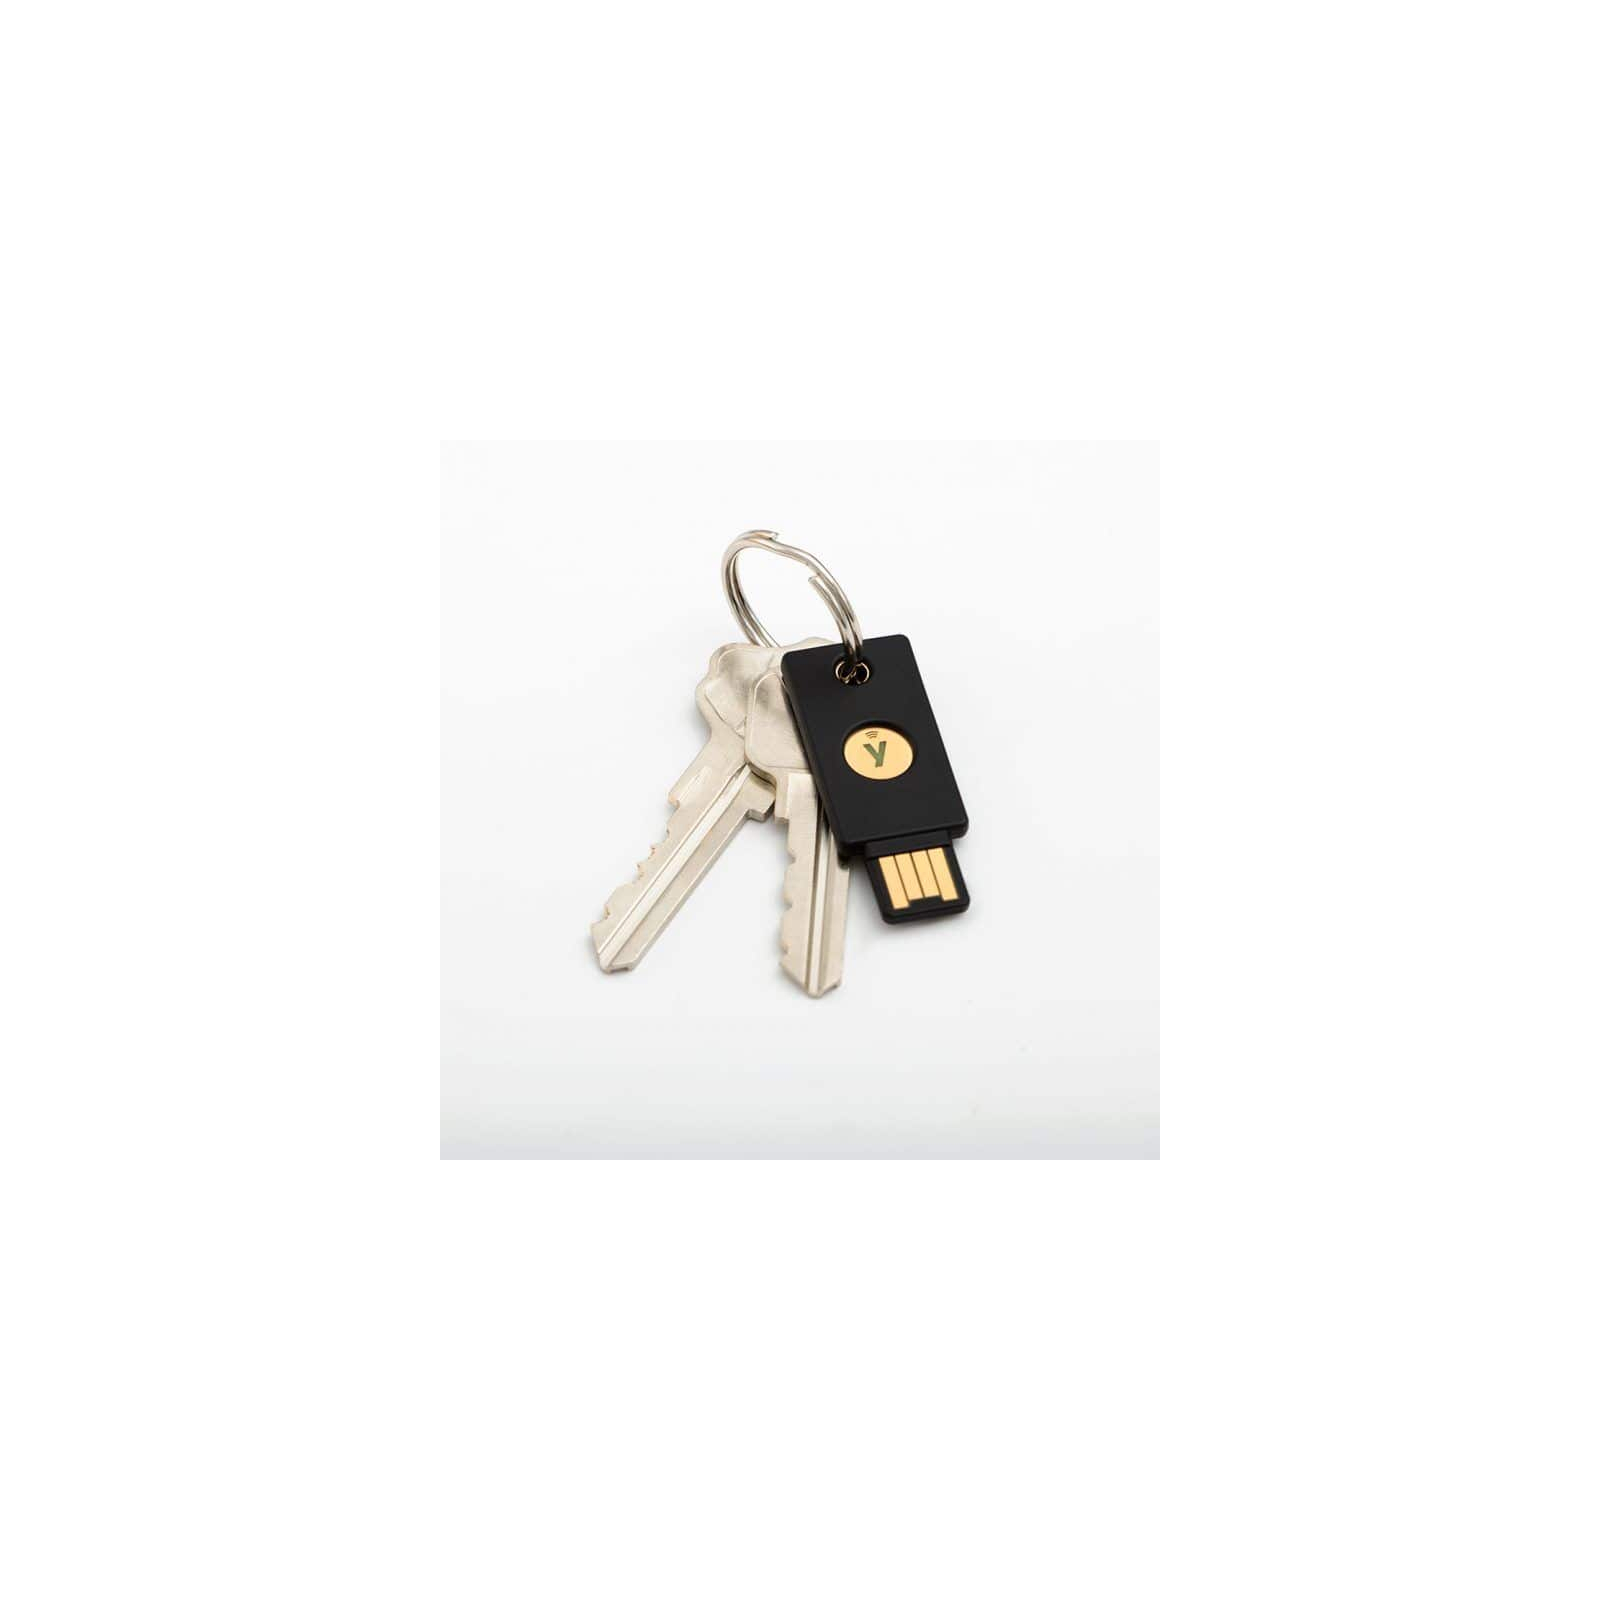 Аппаратный ключ безопасности Yubico YubiKey 5 NFC (YubiKey_5_NFC) изображение 2